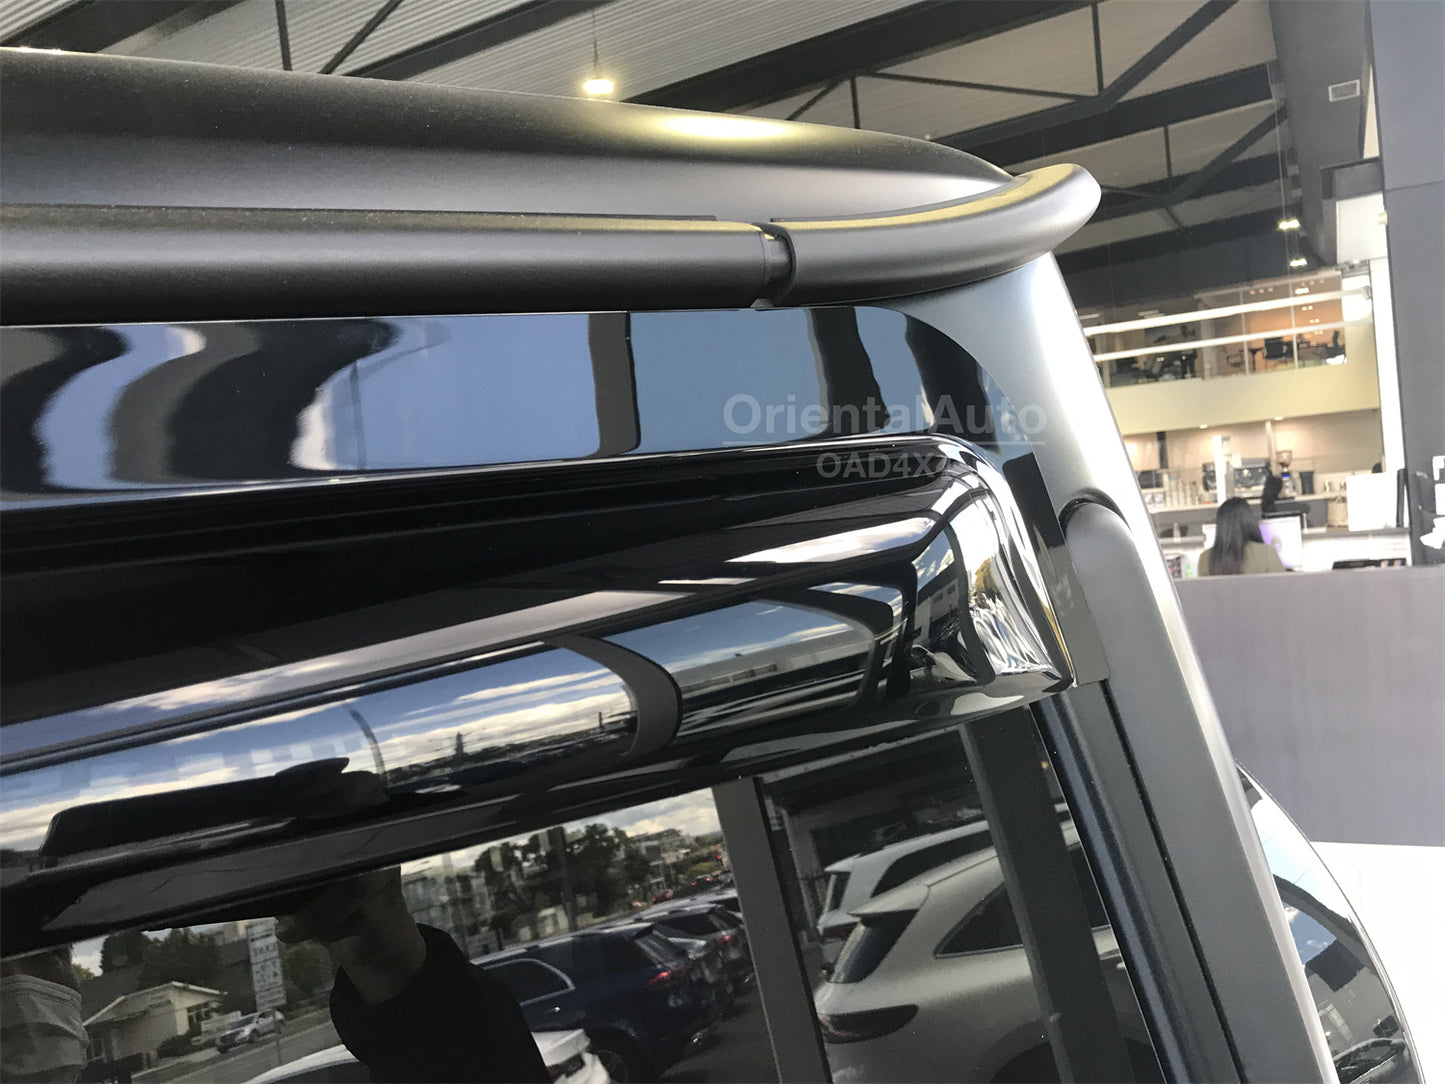 Widened Luxury 6pcs Weathershields For Mercedes-Benz G CLASS 2018+ Weather Shields Window Visor